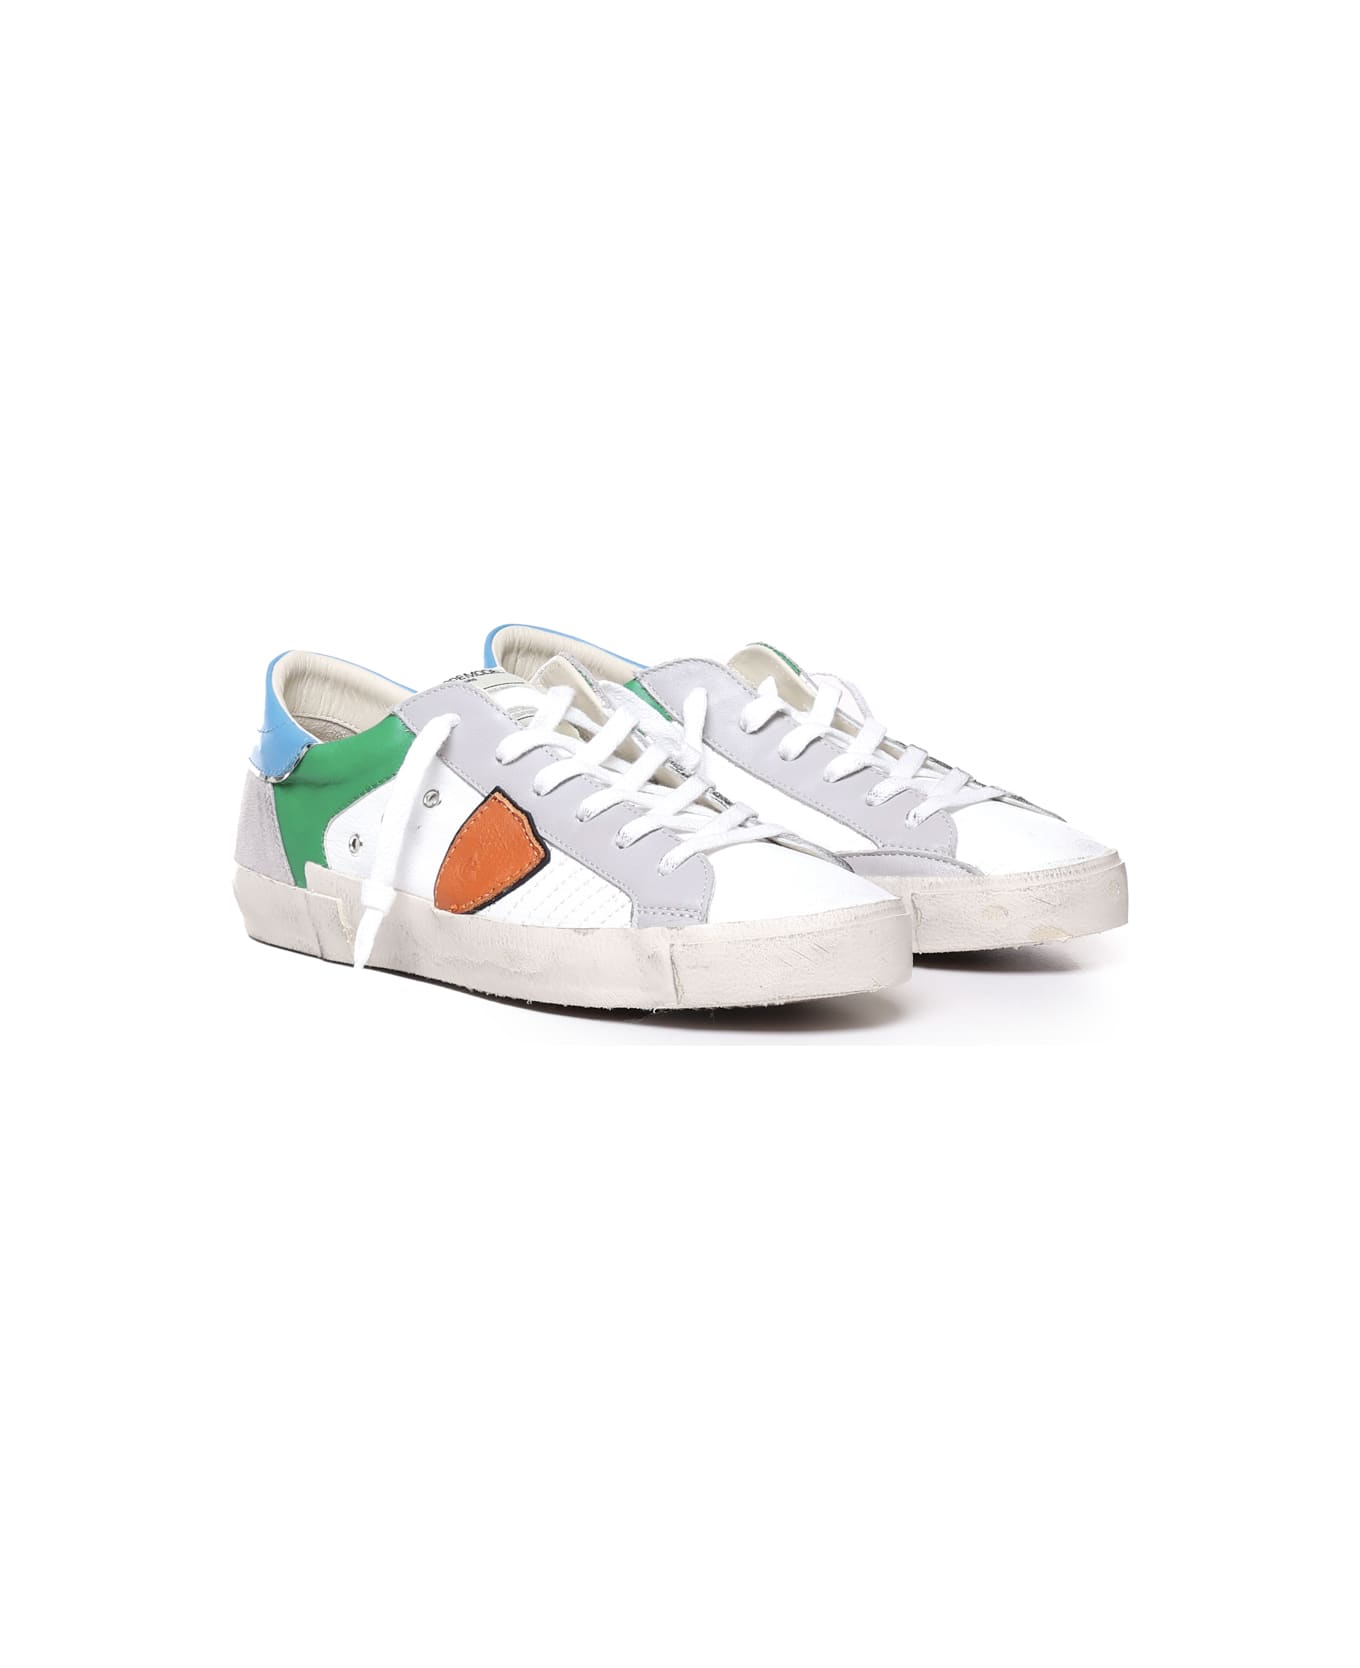 Philippe Model Prsx Low Sneakers - White, multicolor